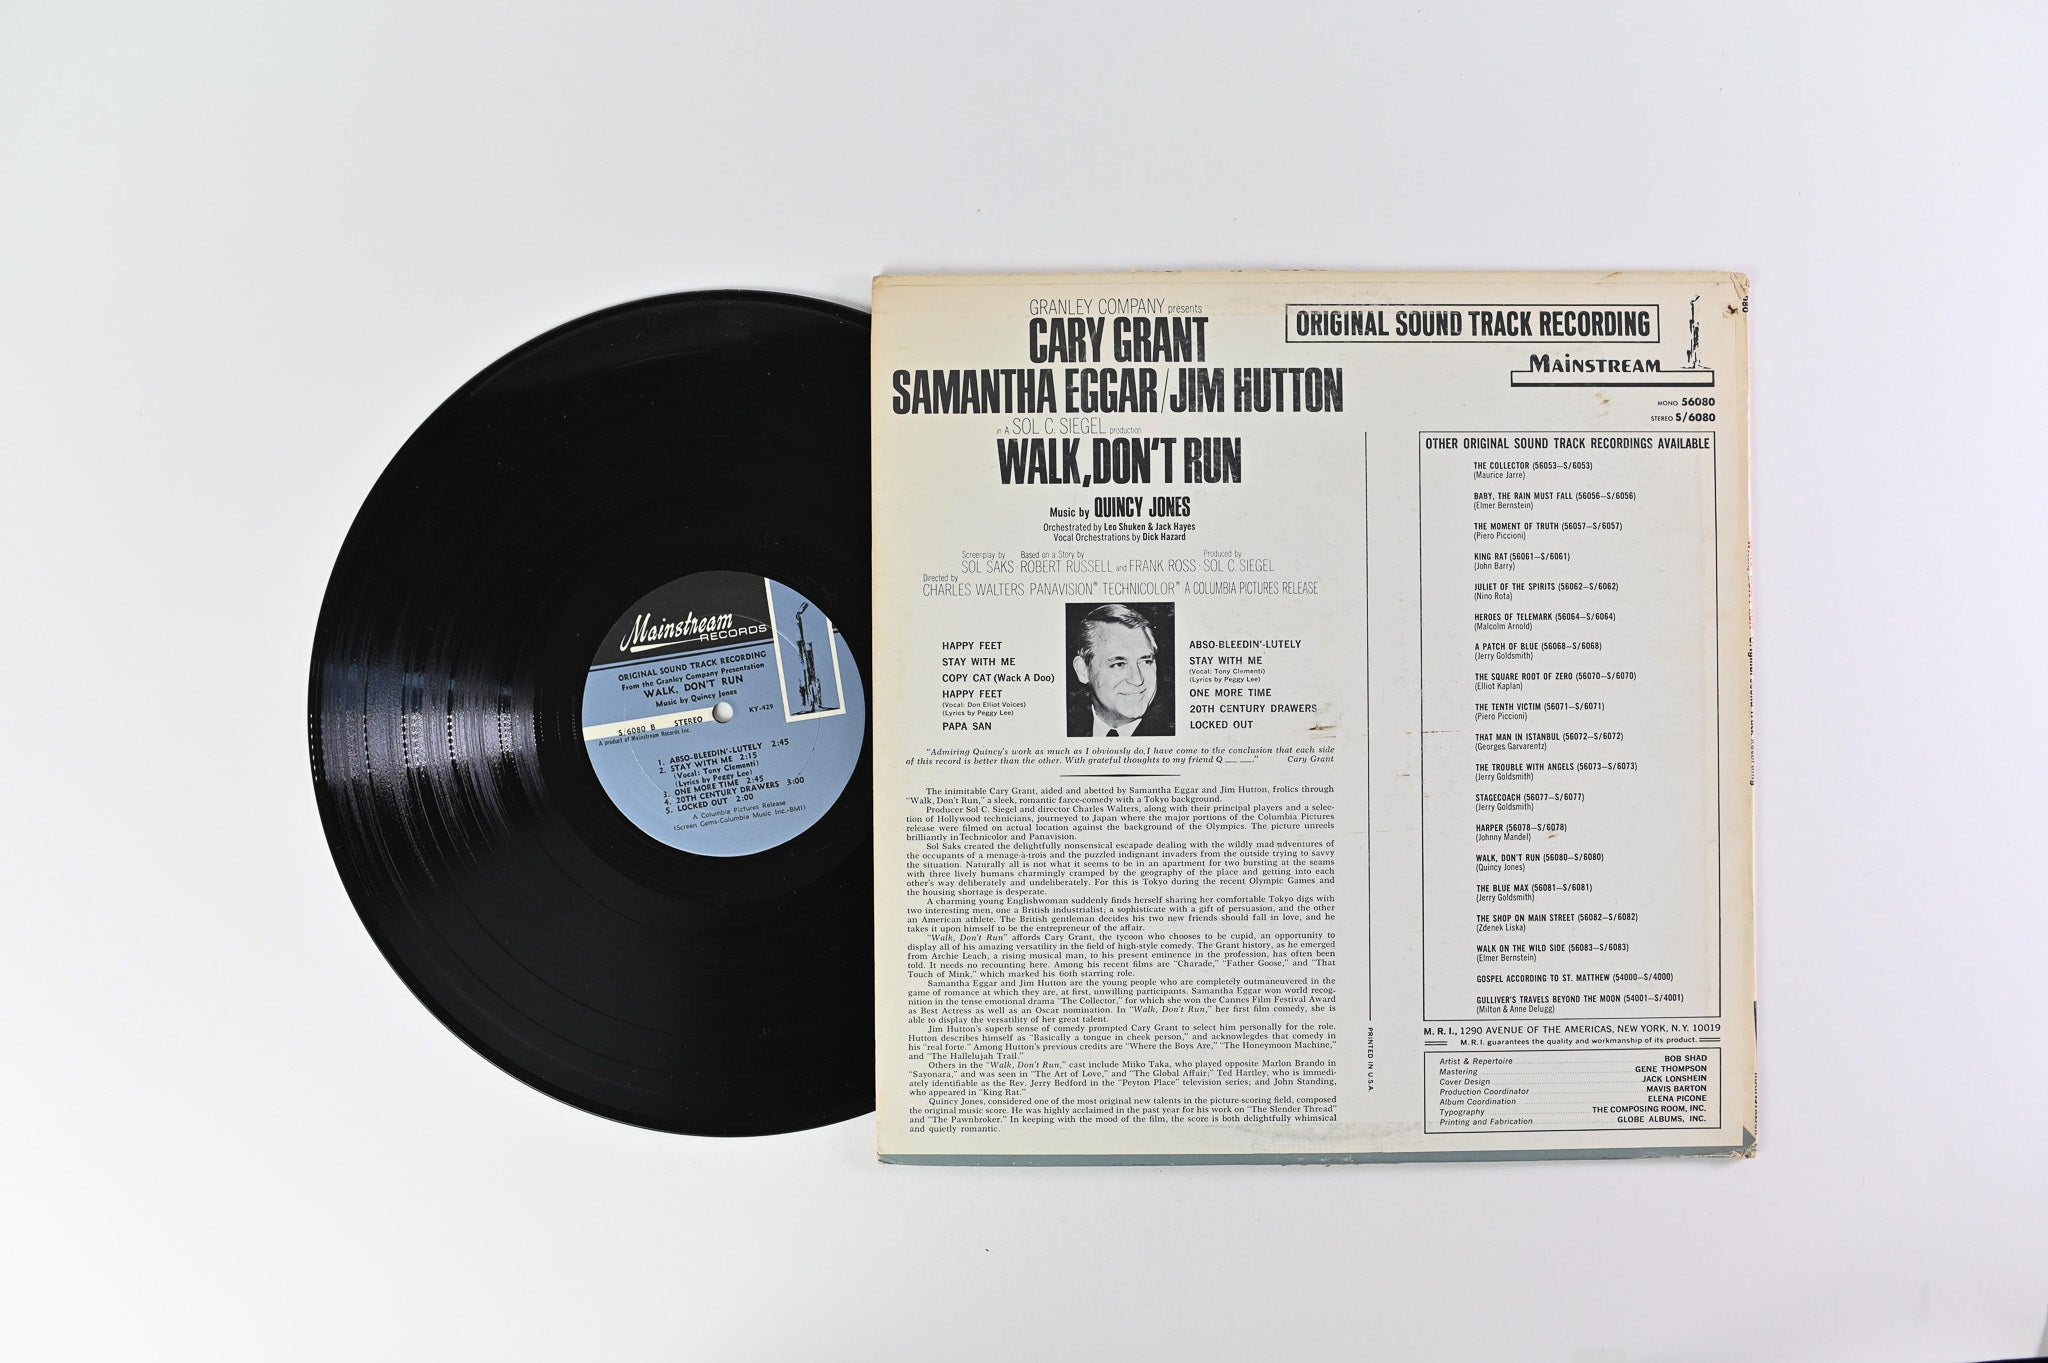 Quincy Jones - Walk, Don't Run - Original Sound Track Recording on Mainstream Records